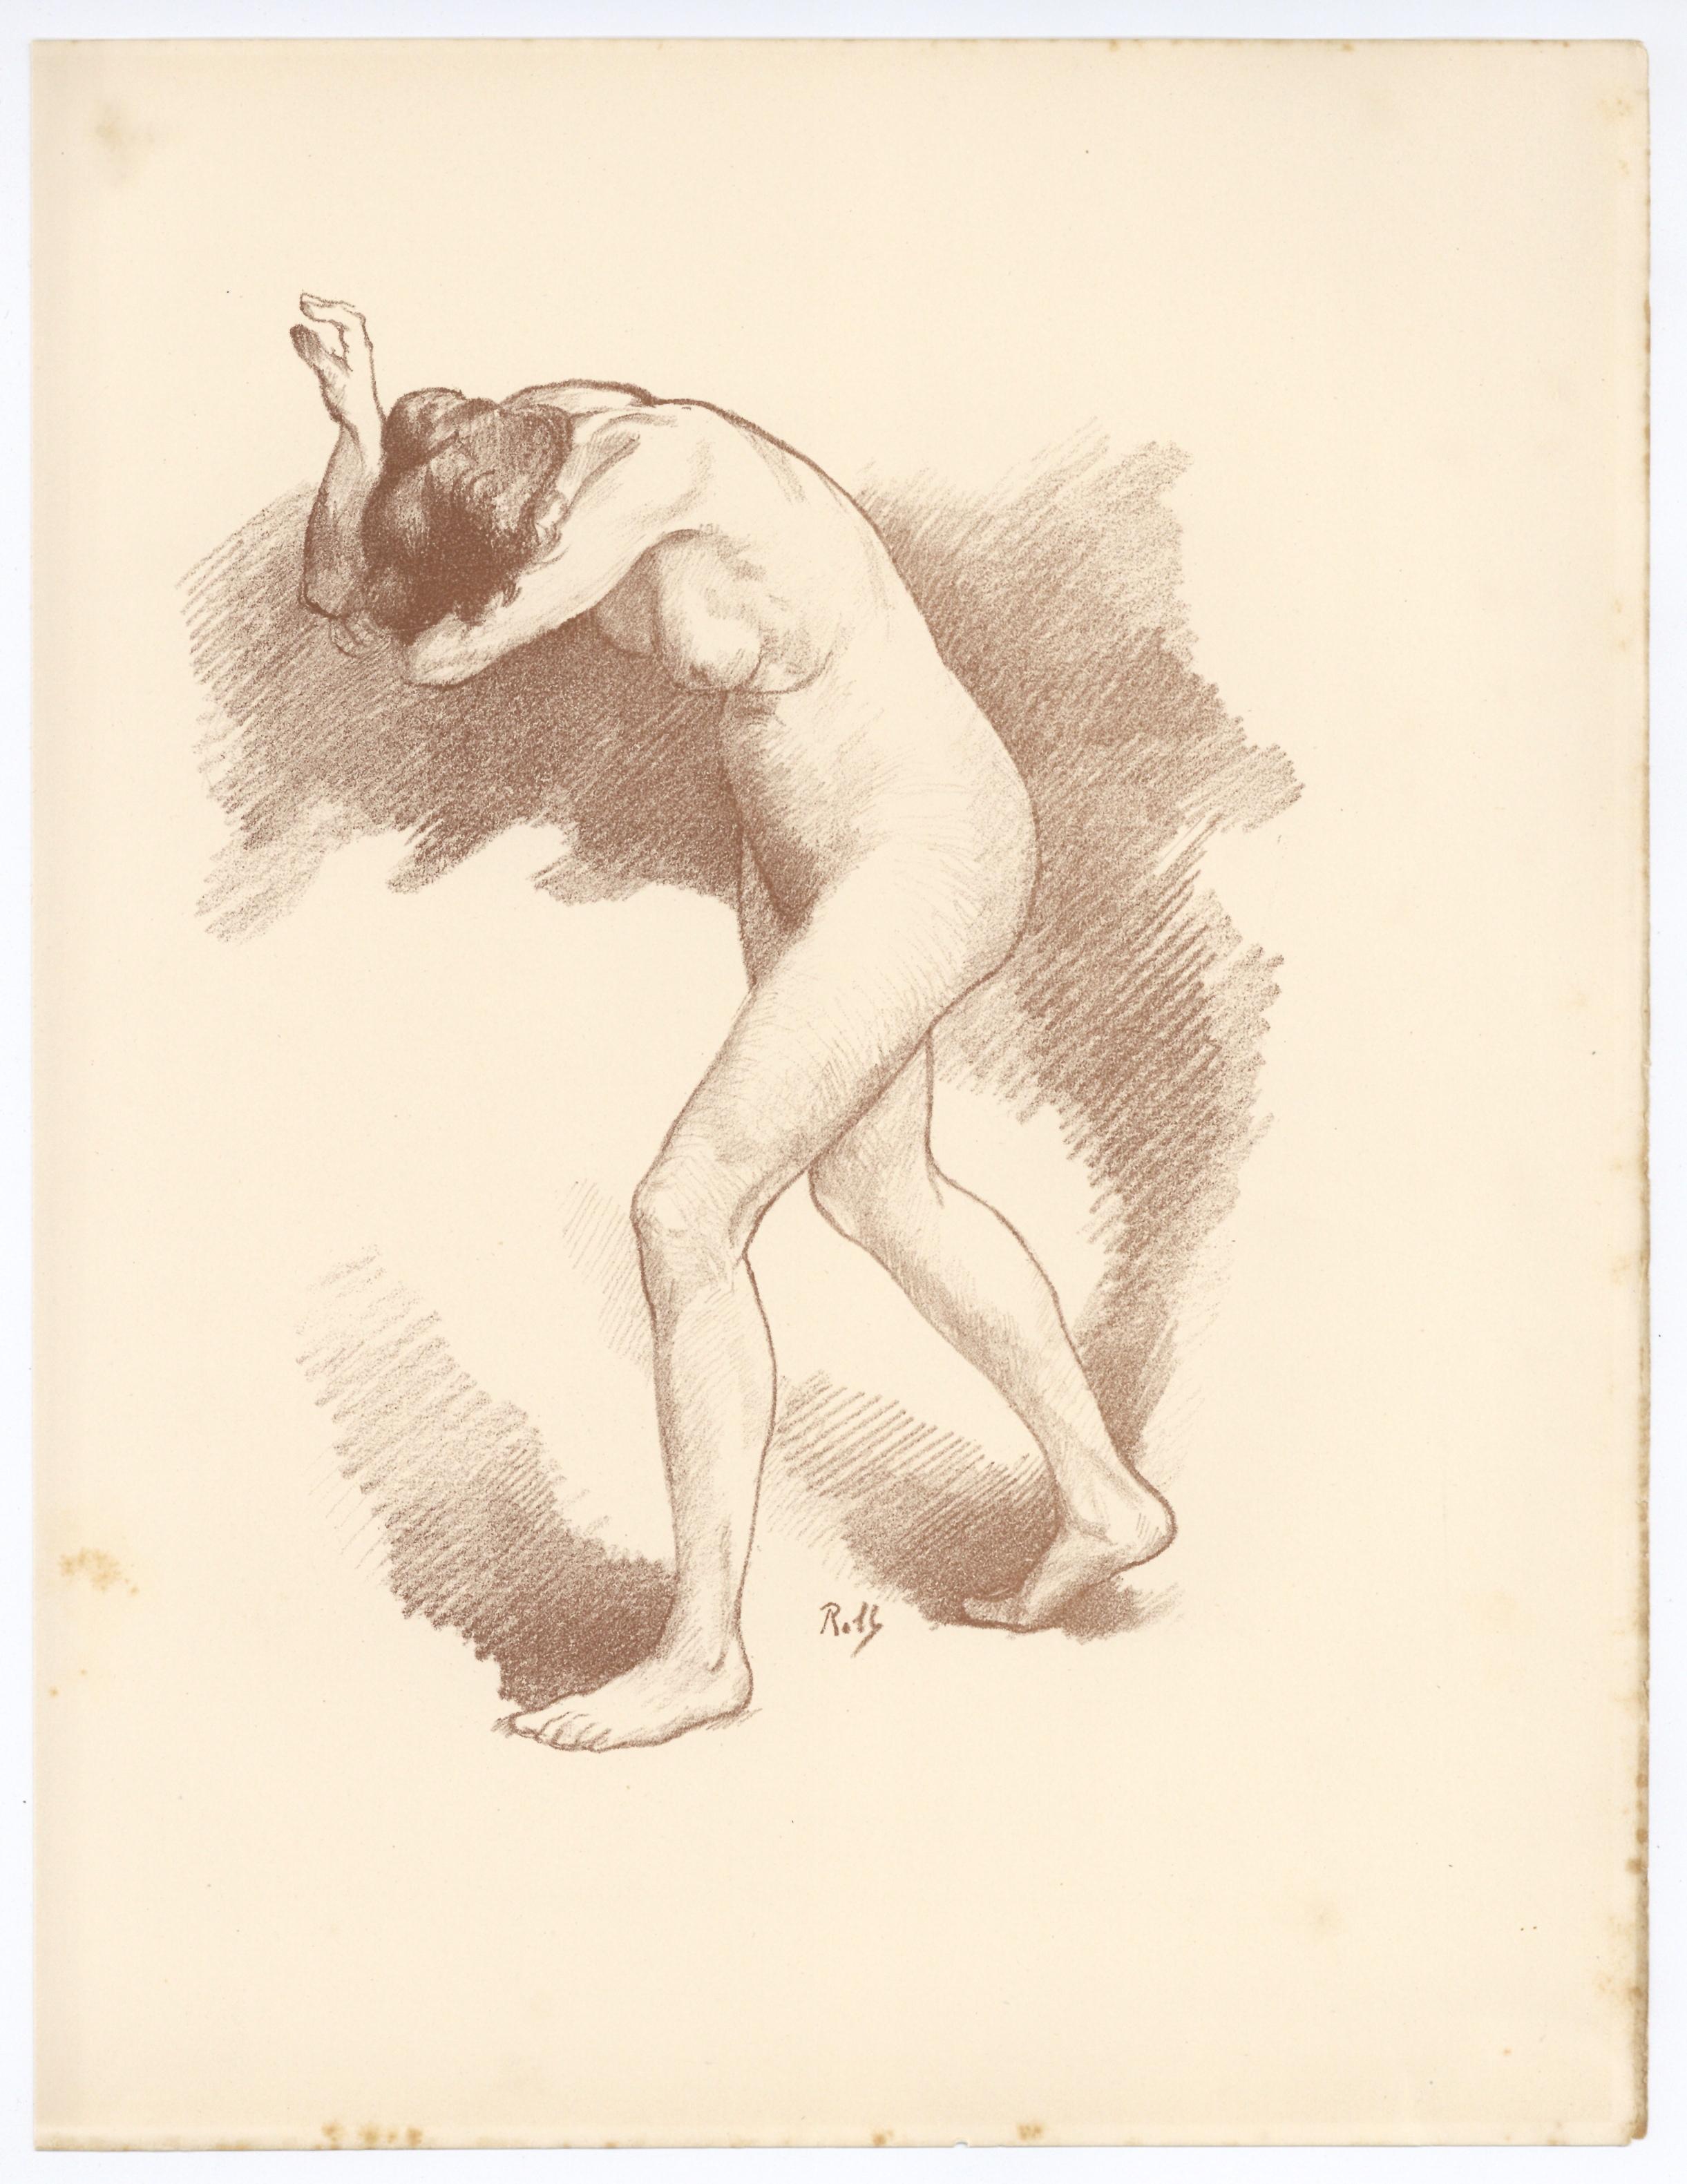 Medium: original lithograph. This impression is from the rare 1897 portfolio 